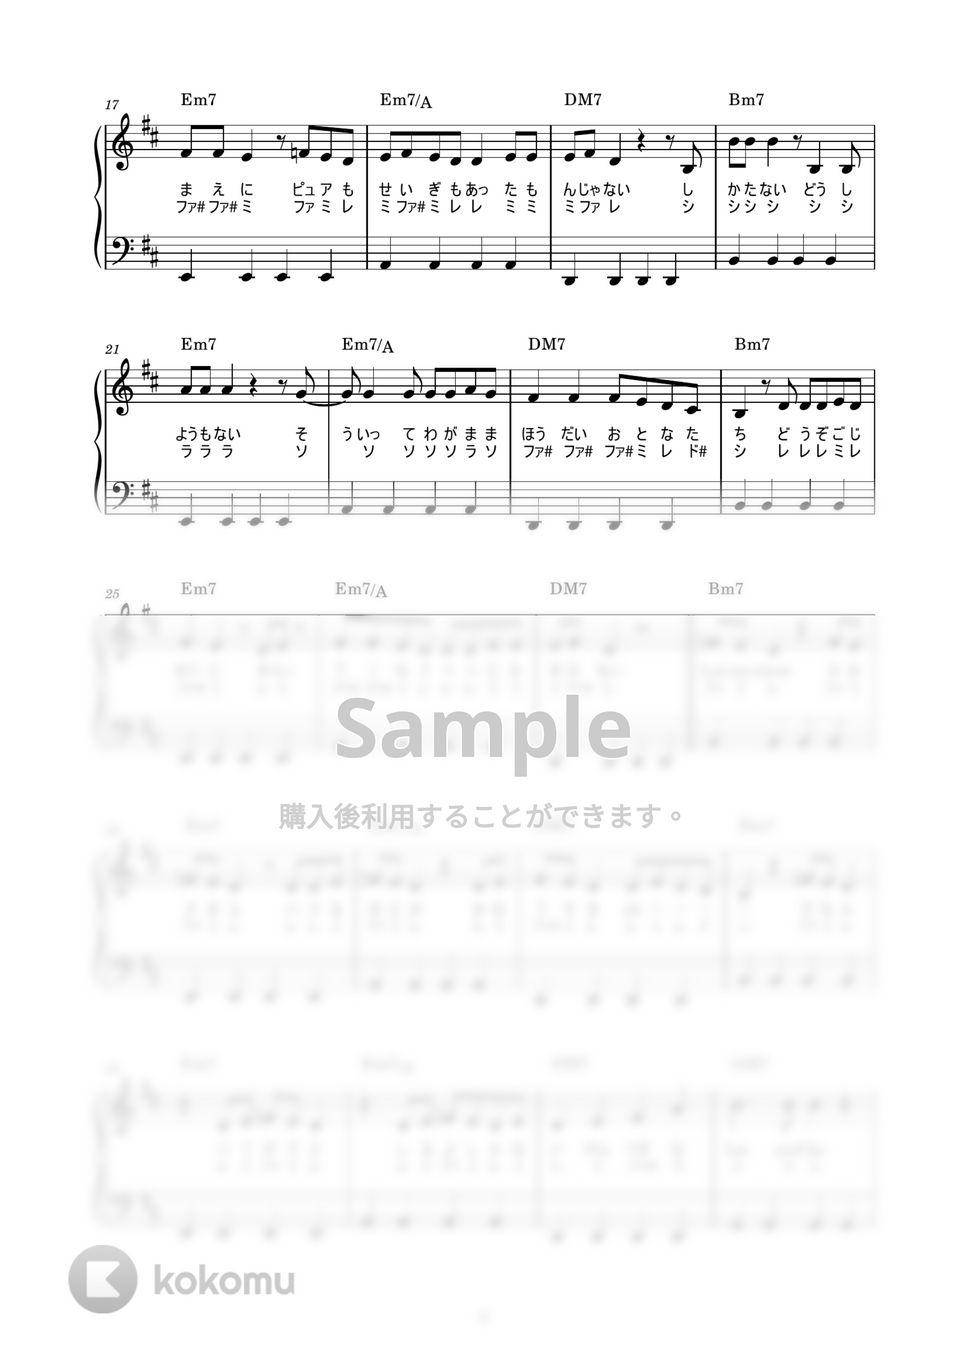 Official 髭男dism - ノーダウト (かんたん / 歌詞付き / ドレミ付き / 初心者) by piano.tokyo